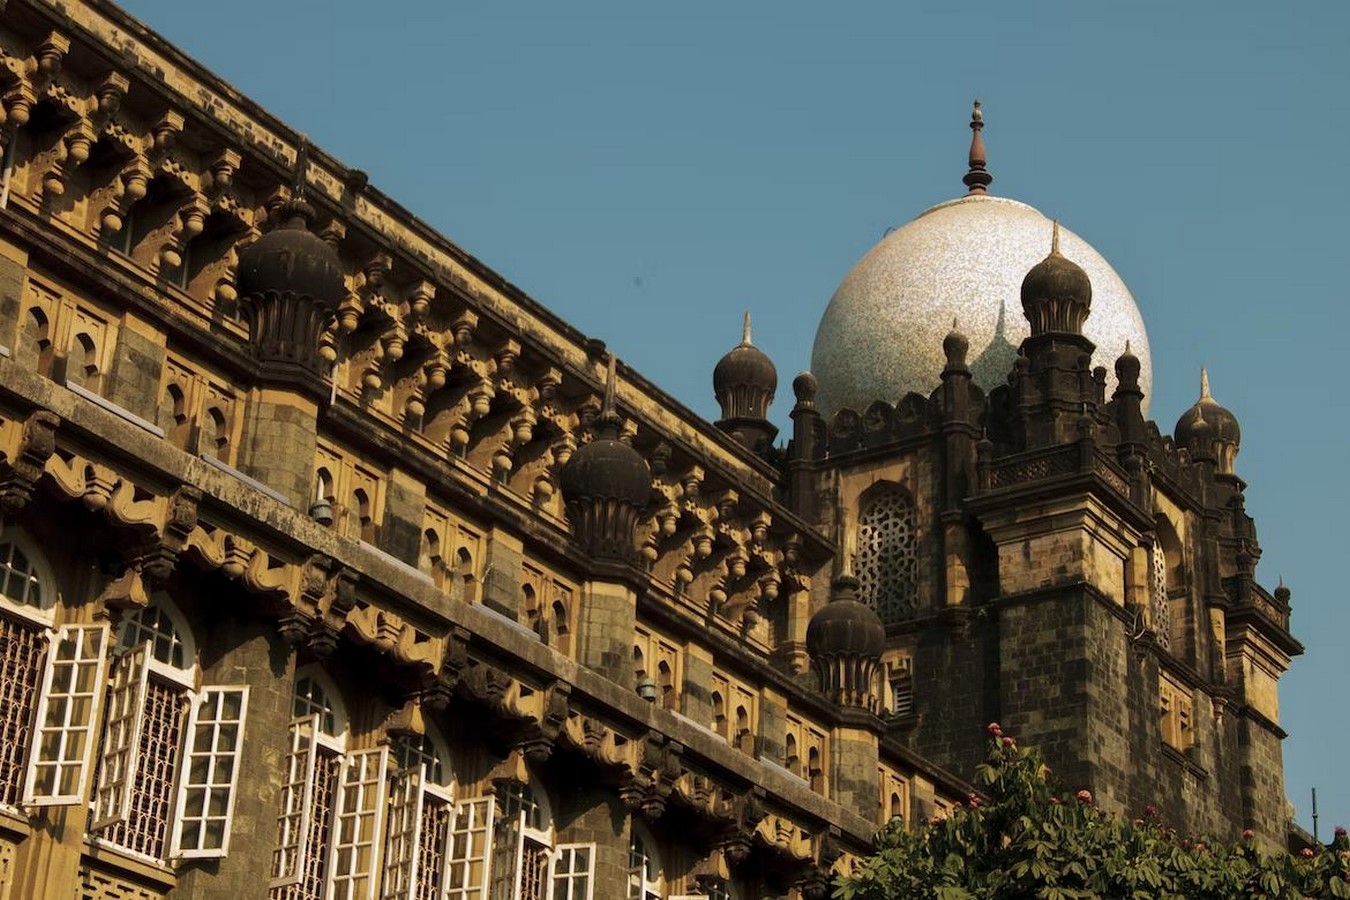 Museums of the World: Chhatrapati Shivaji Maharaj Vastu Sangrahalaya - Sheet2